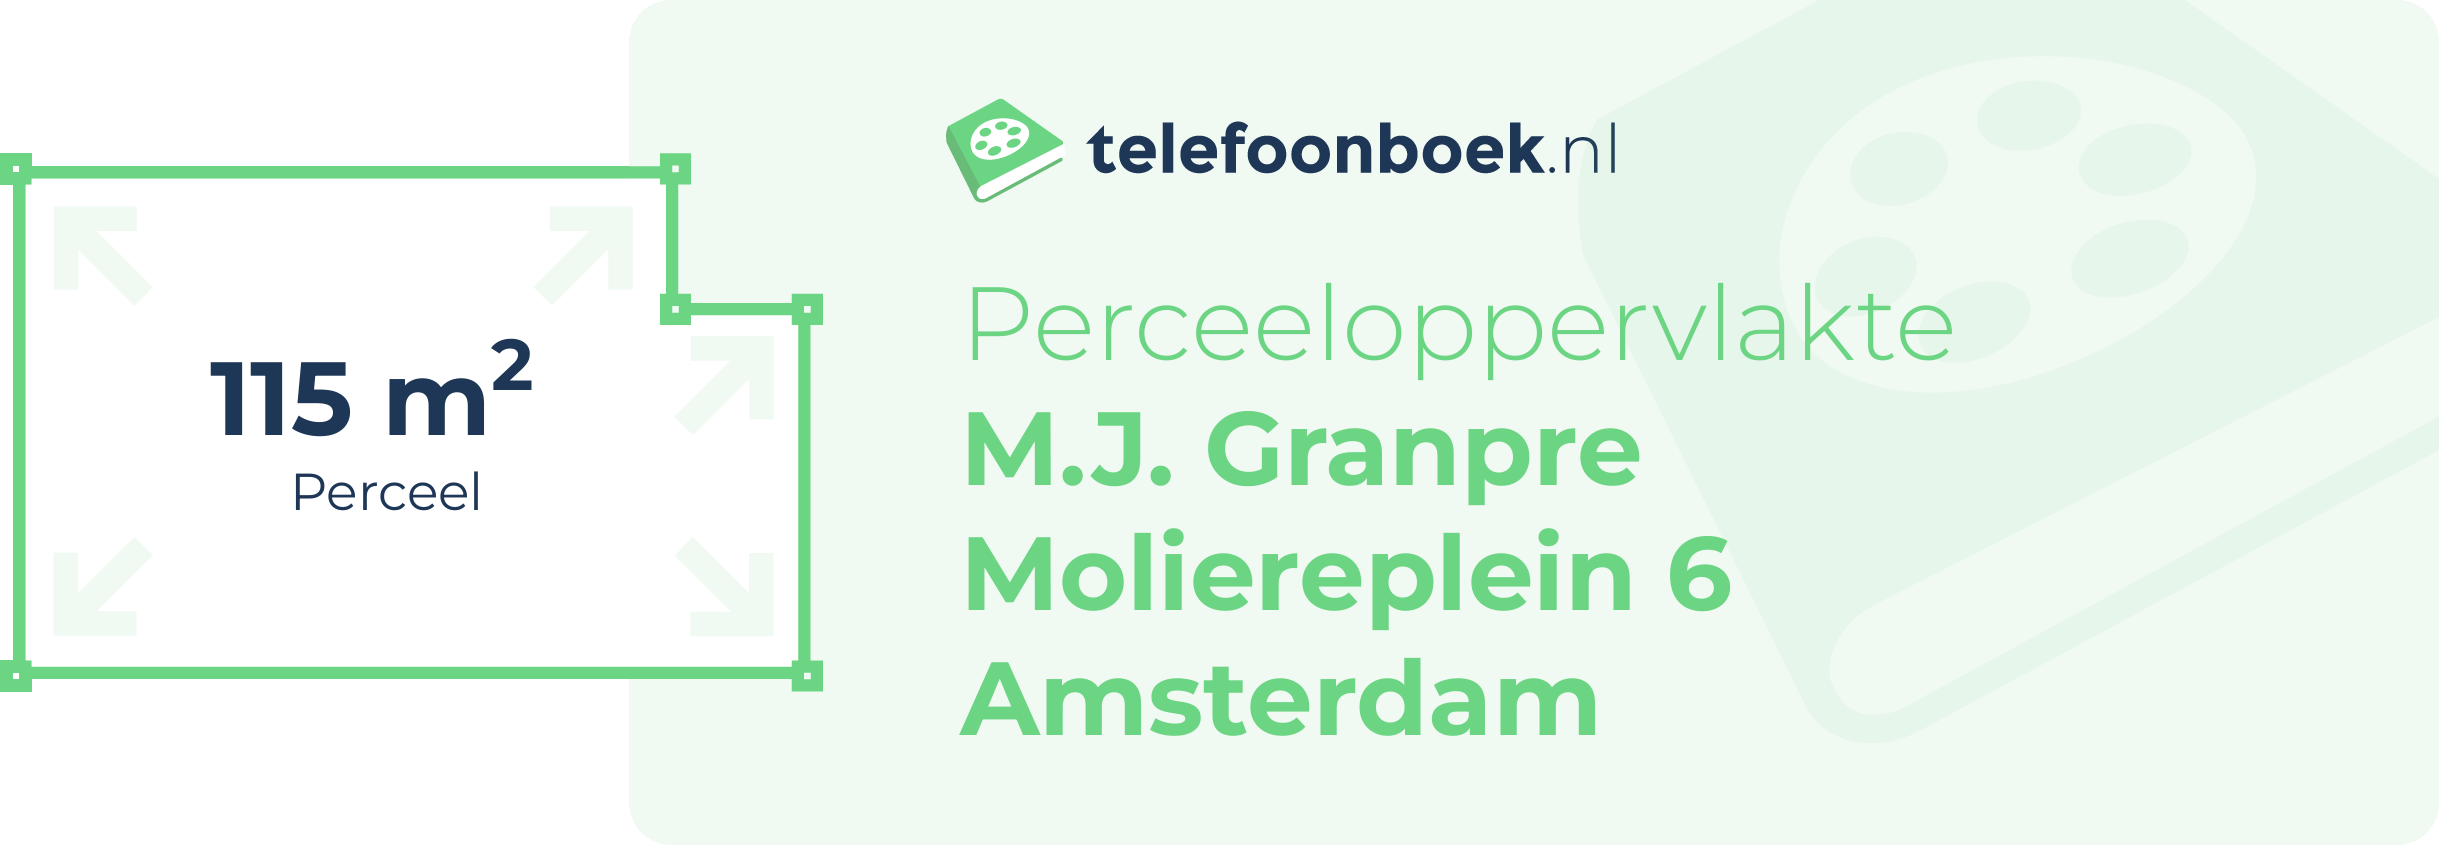 Perceeloppervlakte M.J. Granpre Moliereplein 6 Amsterdam